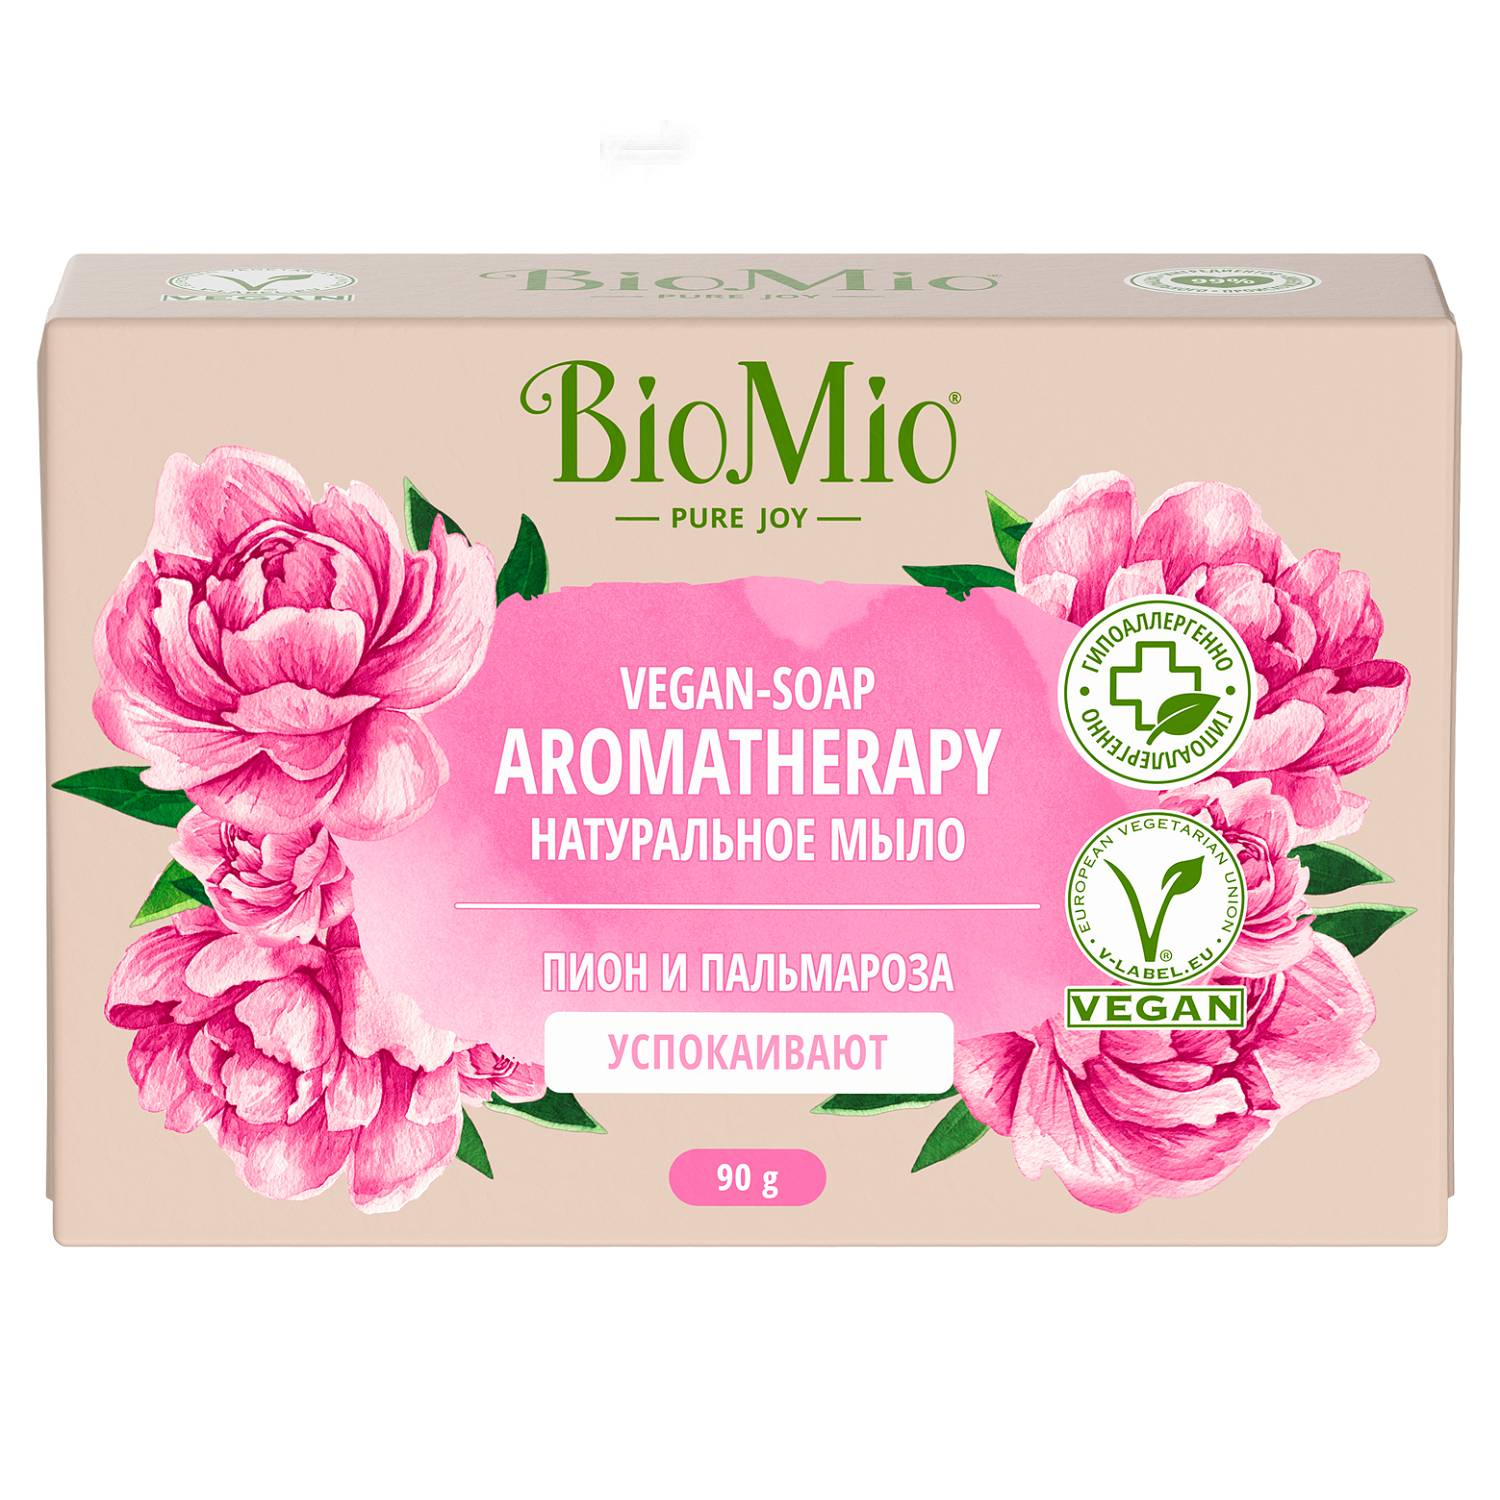 BioMio Натуральное мыло Пион и пальмароза Vegan Soap Aromatherapy, 90 г (BioMio, Мыло)